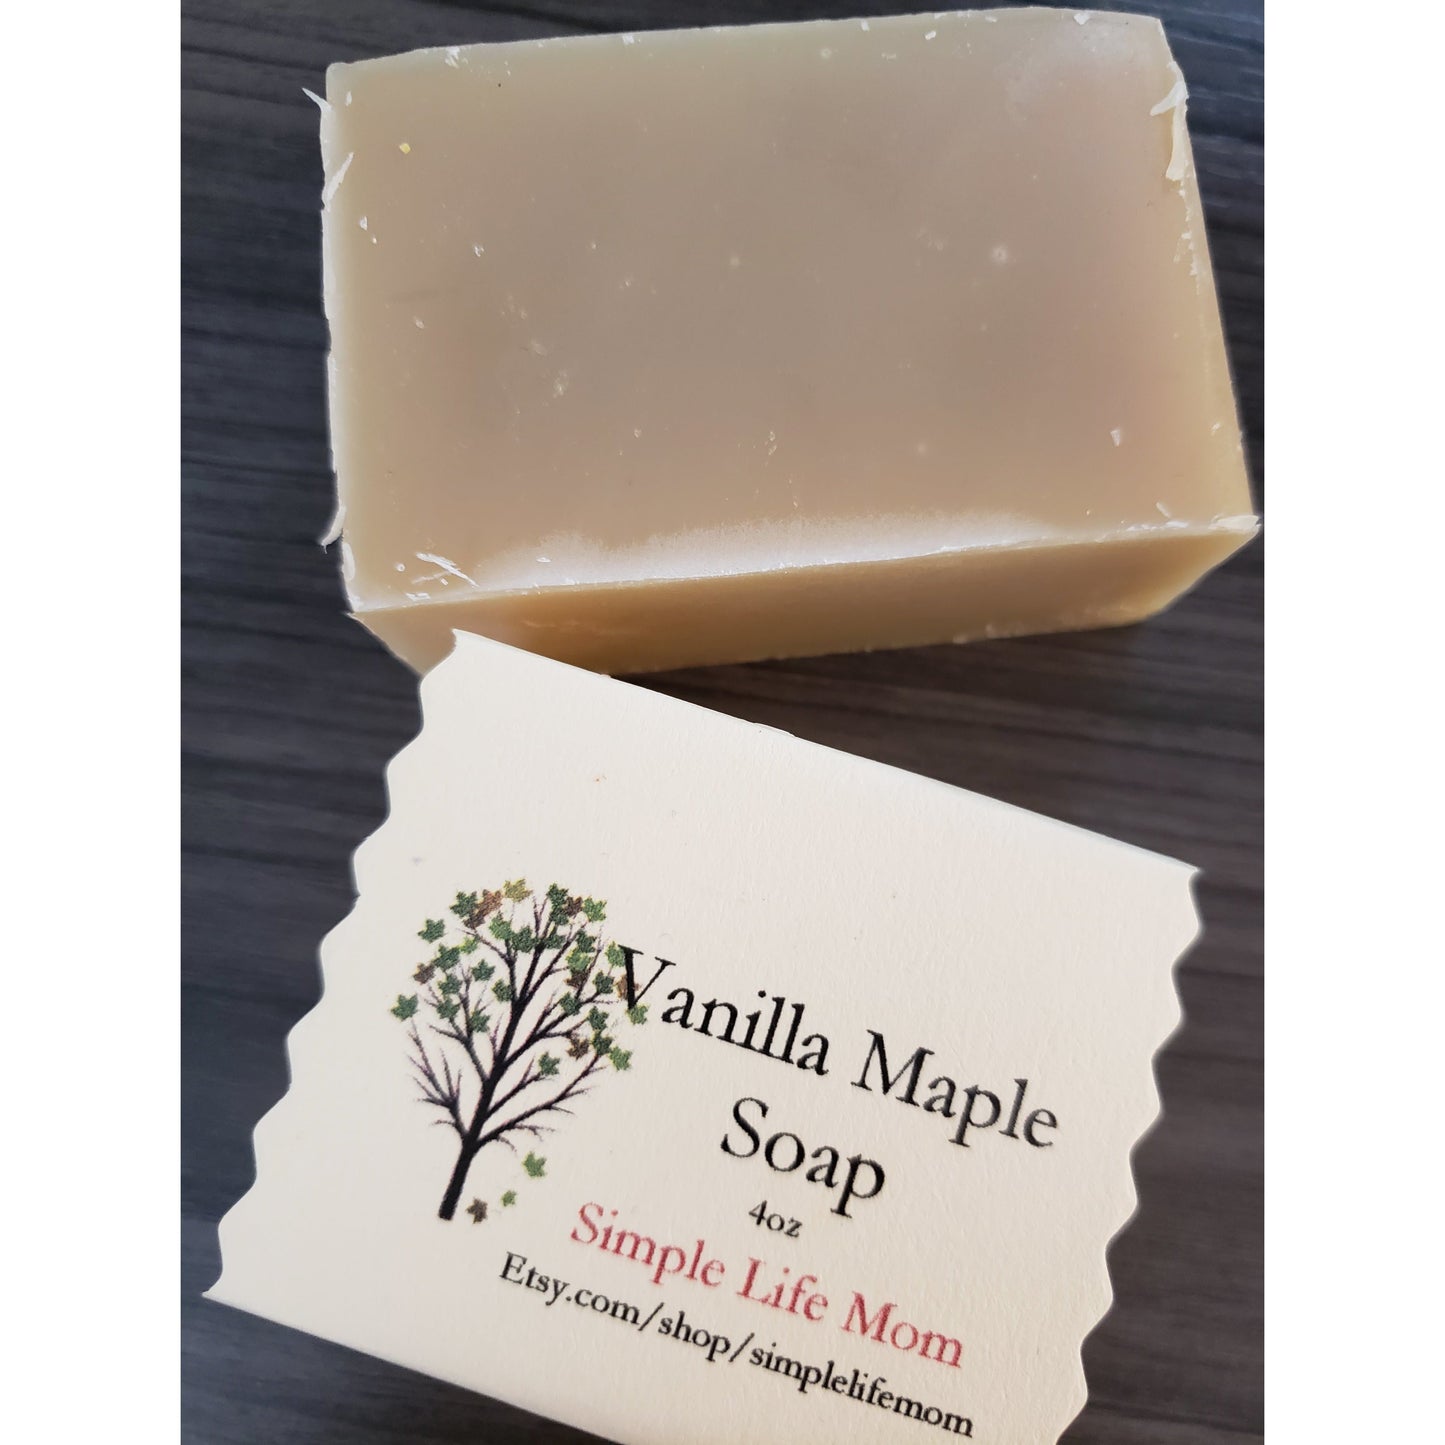 Vanilla Maple Soap